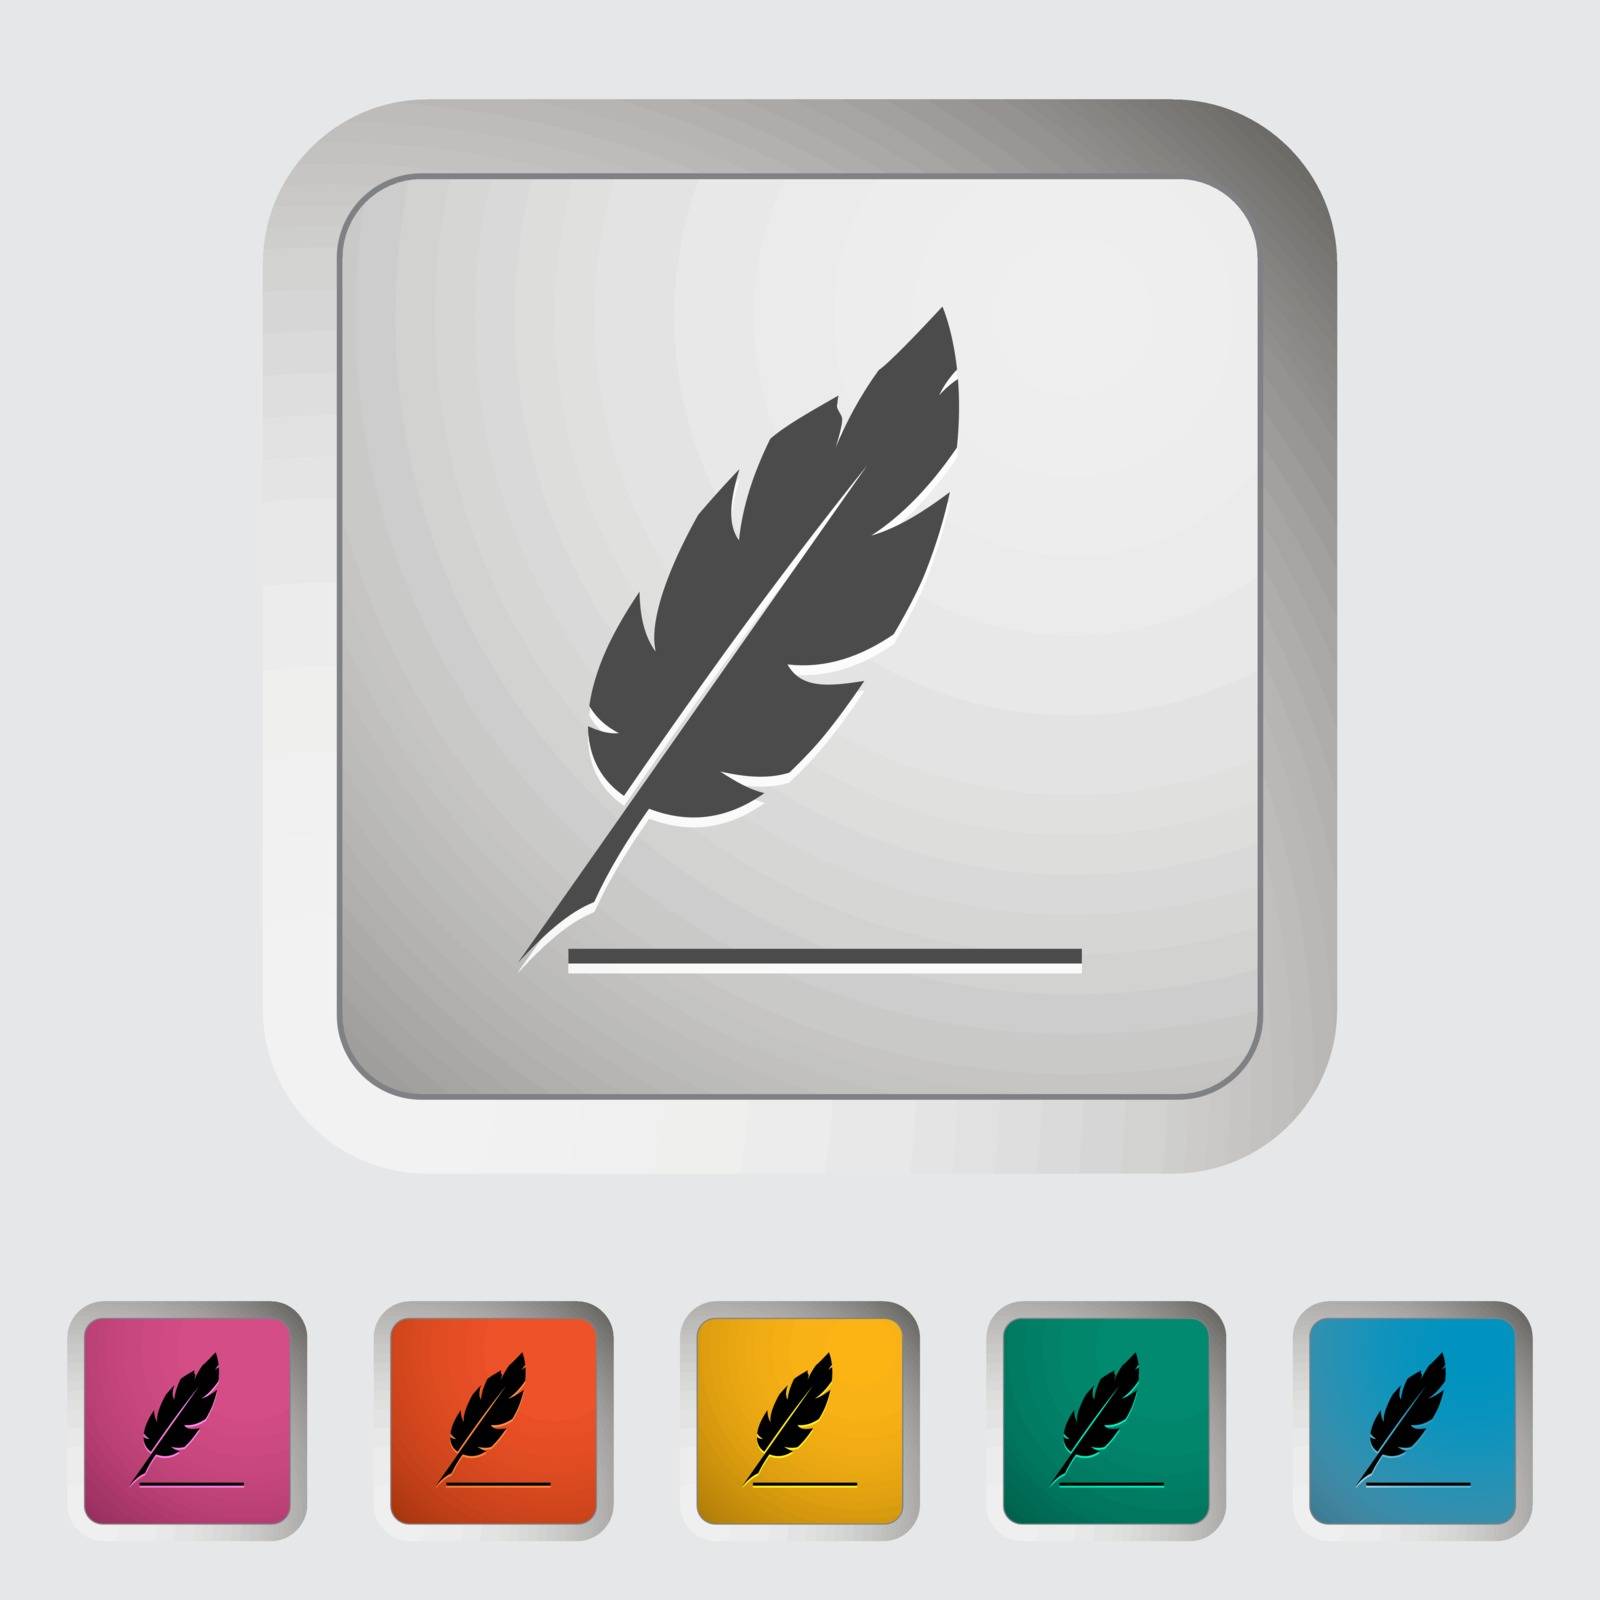 Feather. Single icon. Vector illustration.